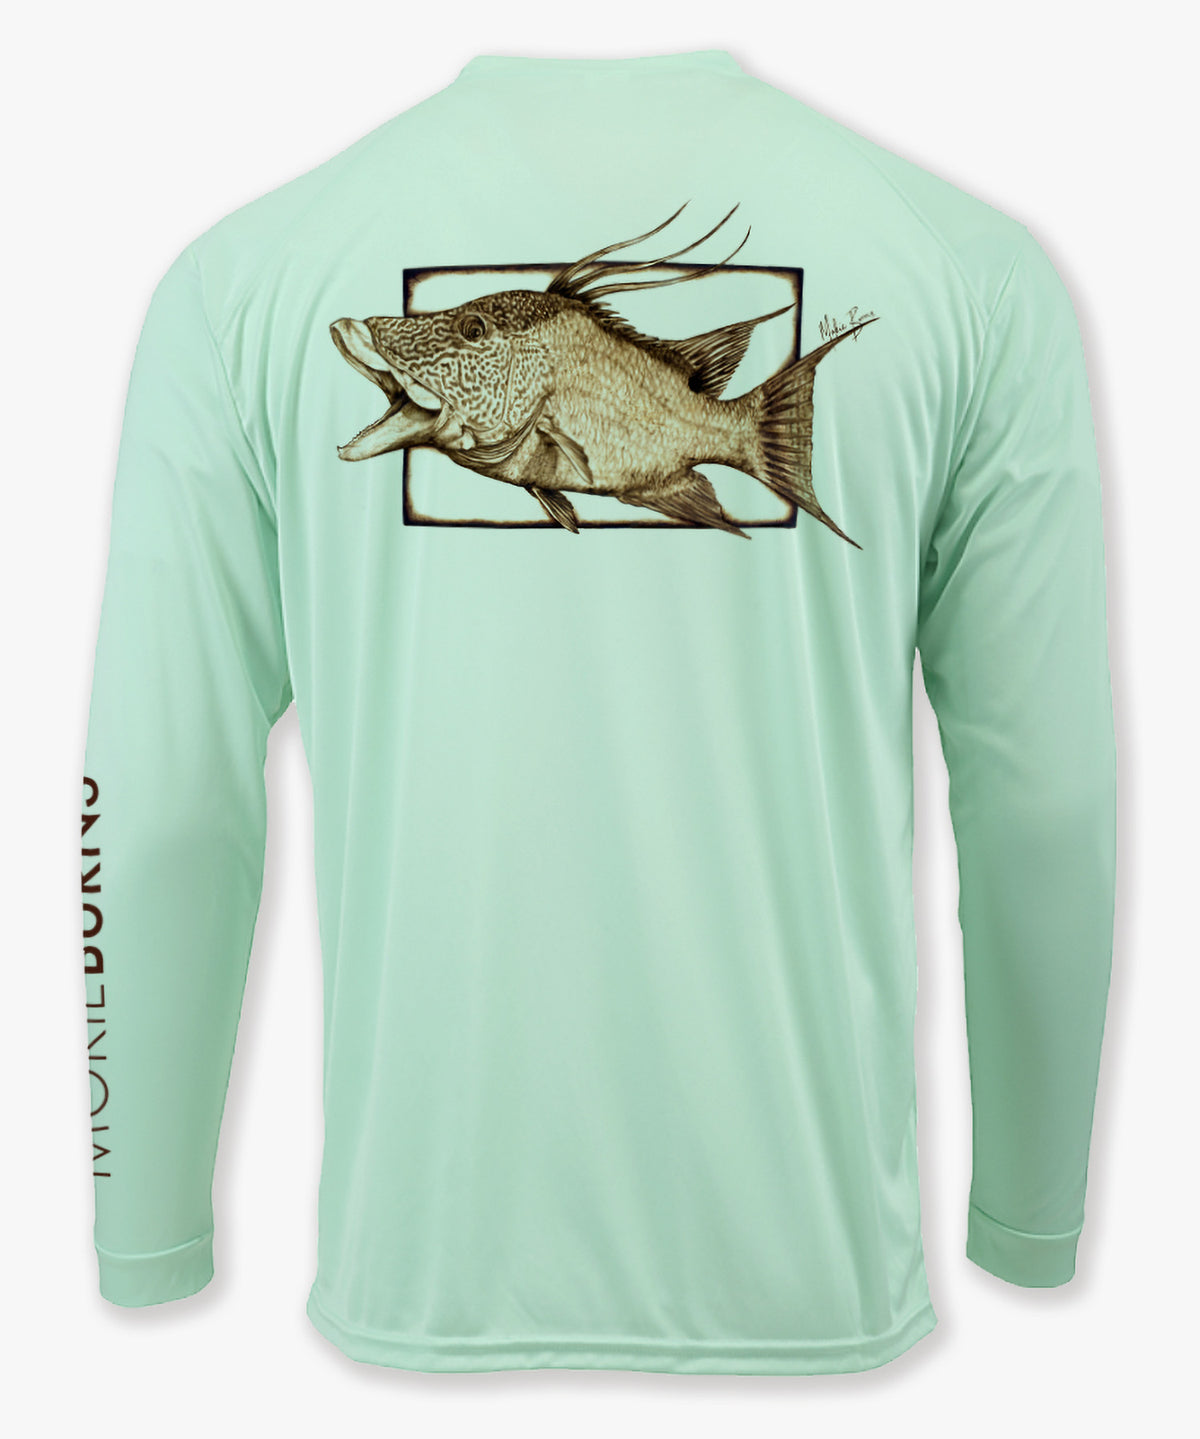 Mens Performance Fishing Shirt - Hogfish - mokieburns